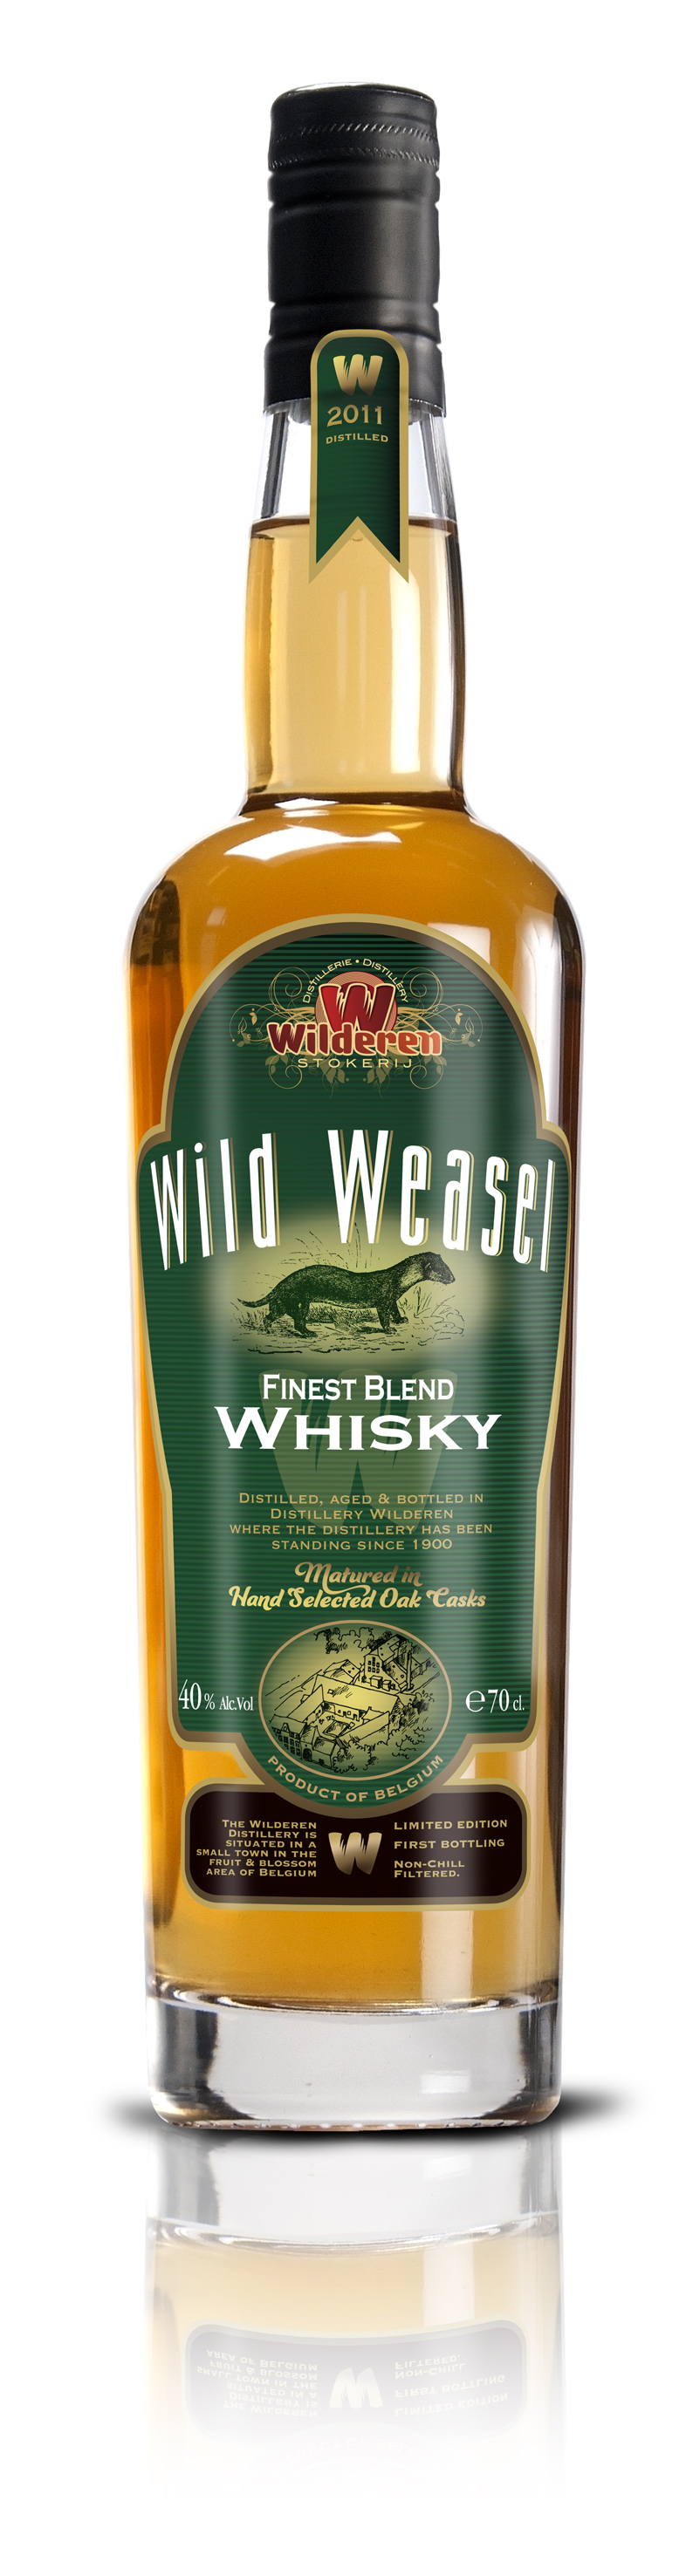 Wild Weasel Finest Blend